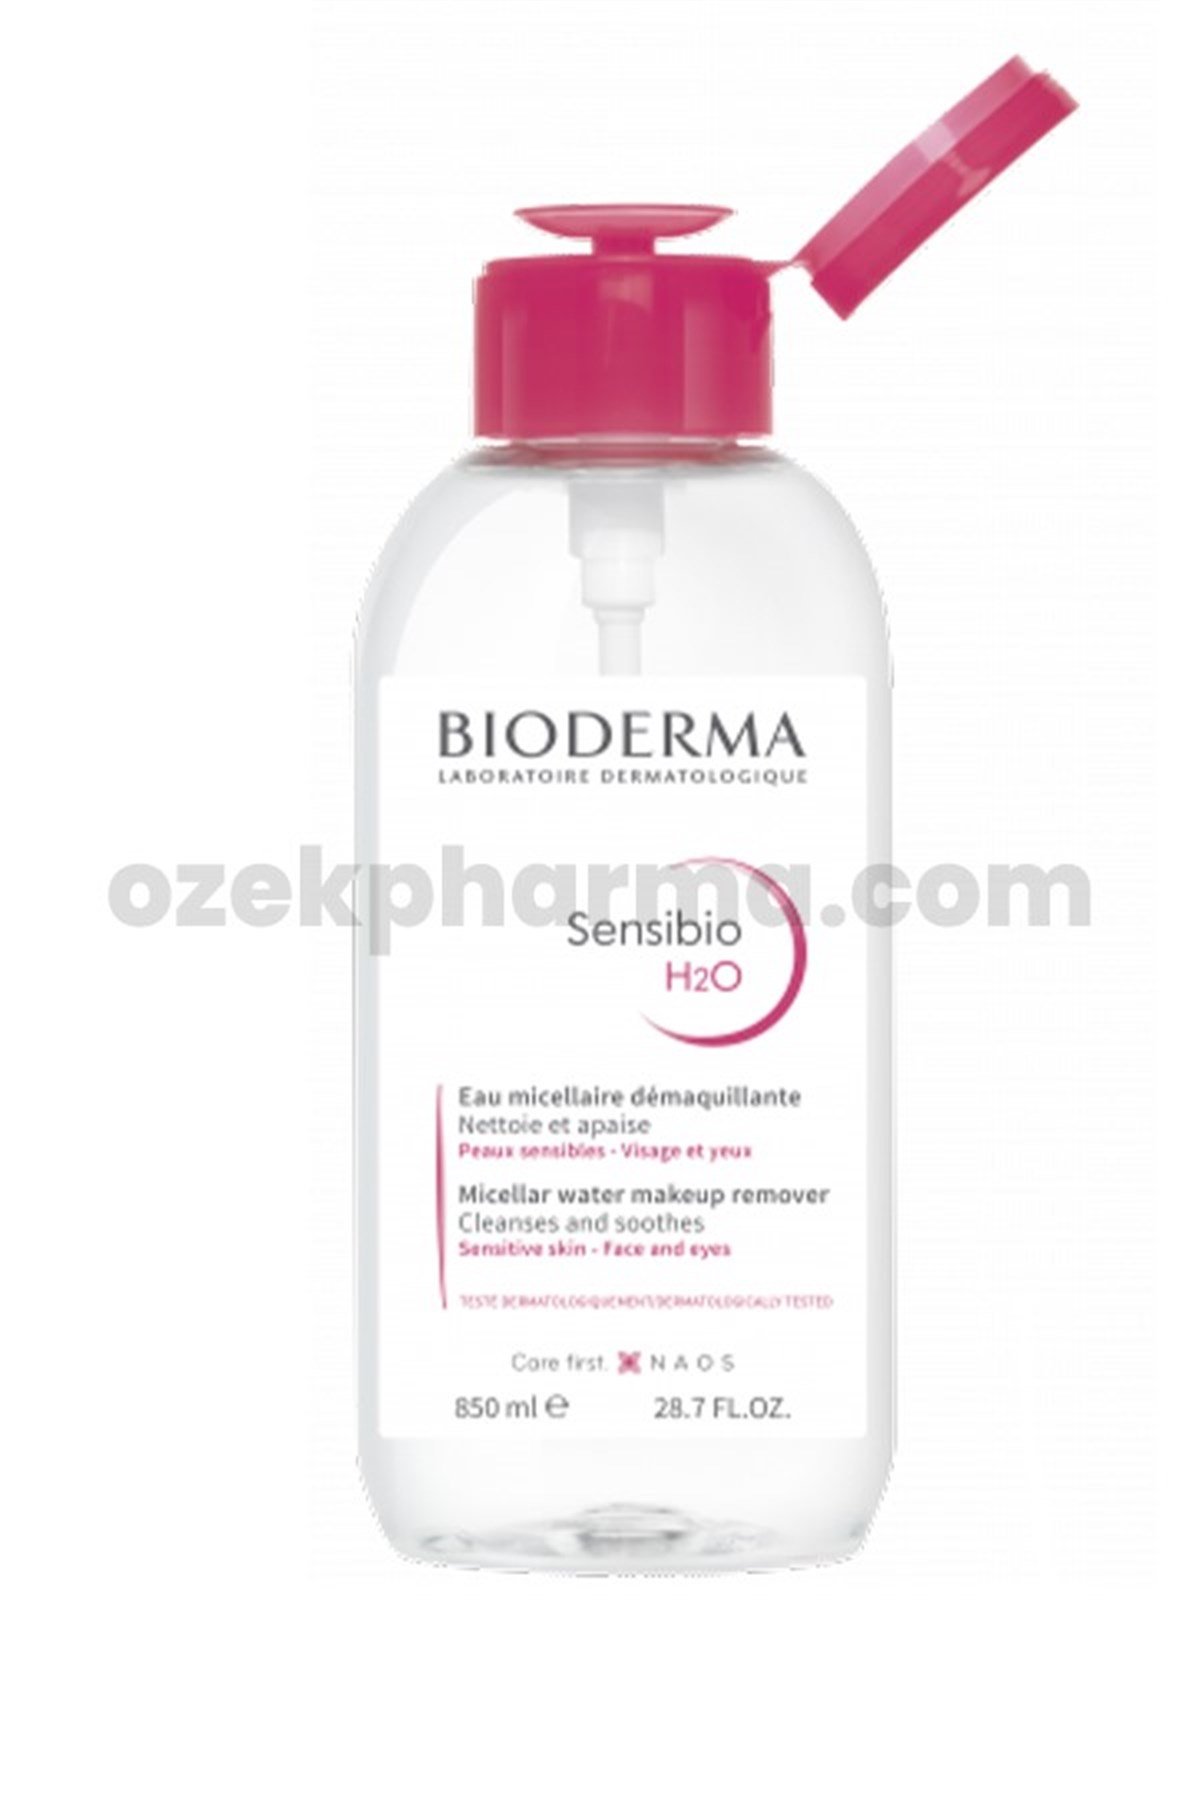 Bioderma Sensibio H2O 850 ml | ozekpharma.com